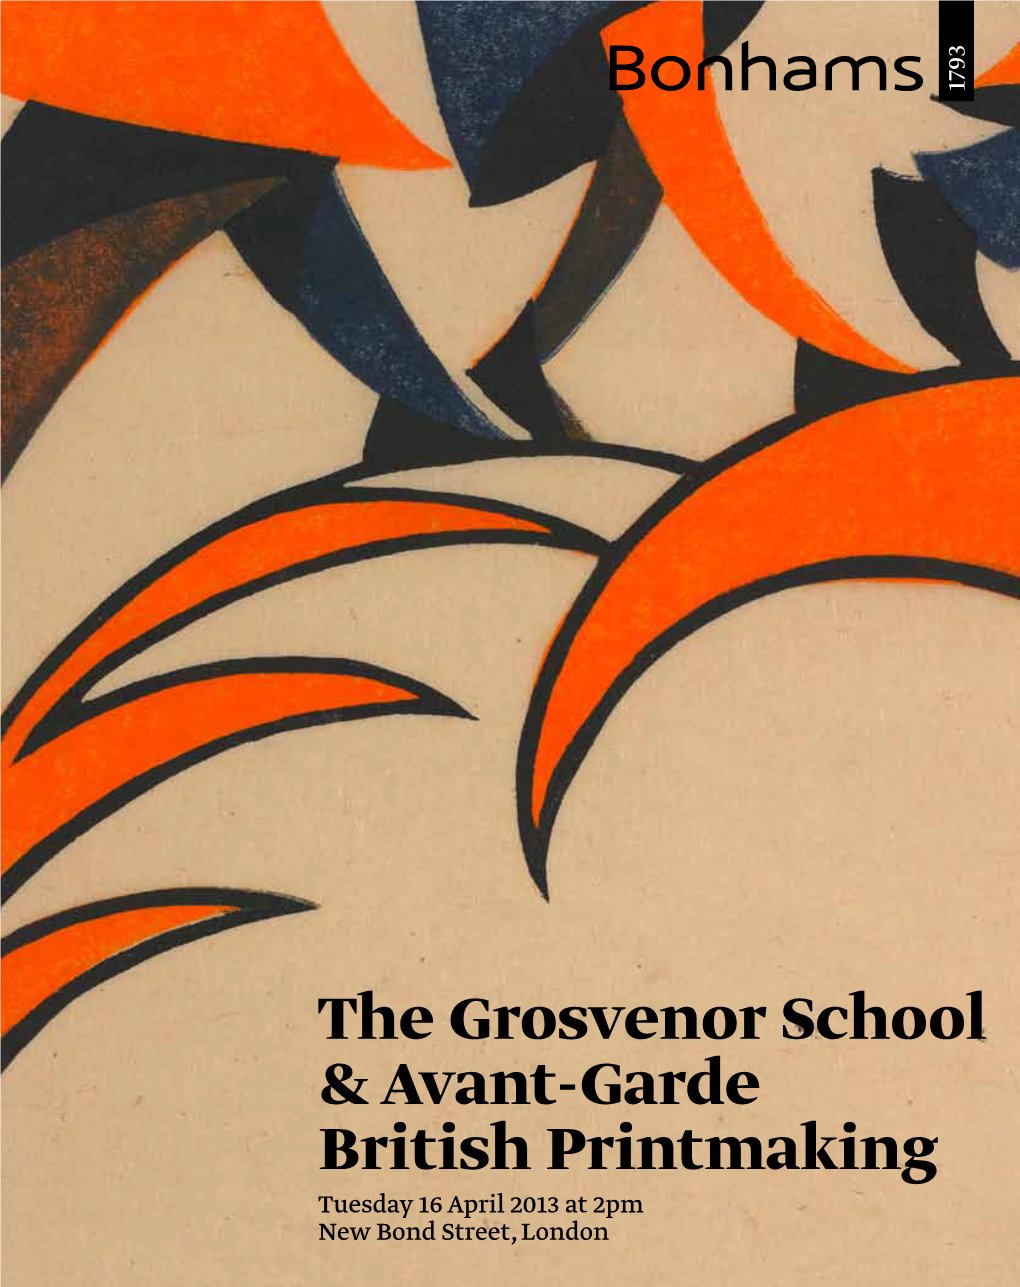 The Grosvenor School & Avant-Garde British Printmaking